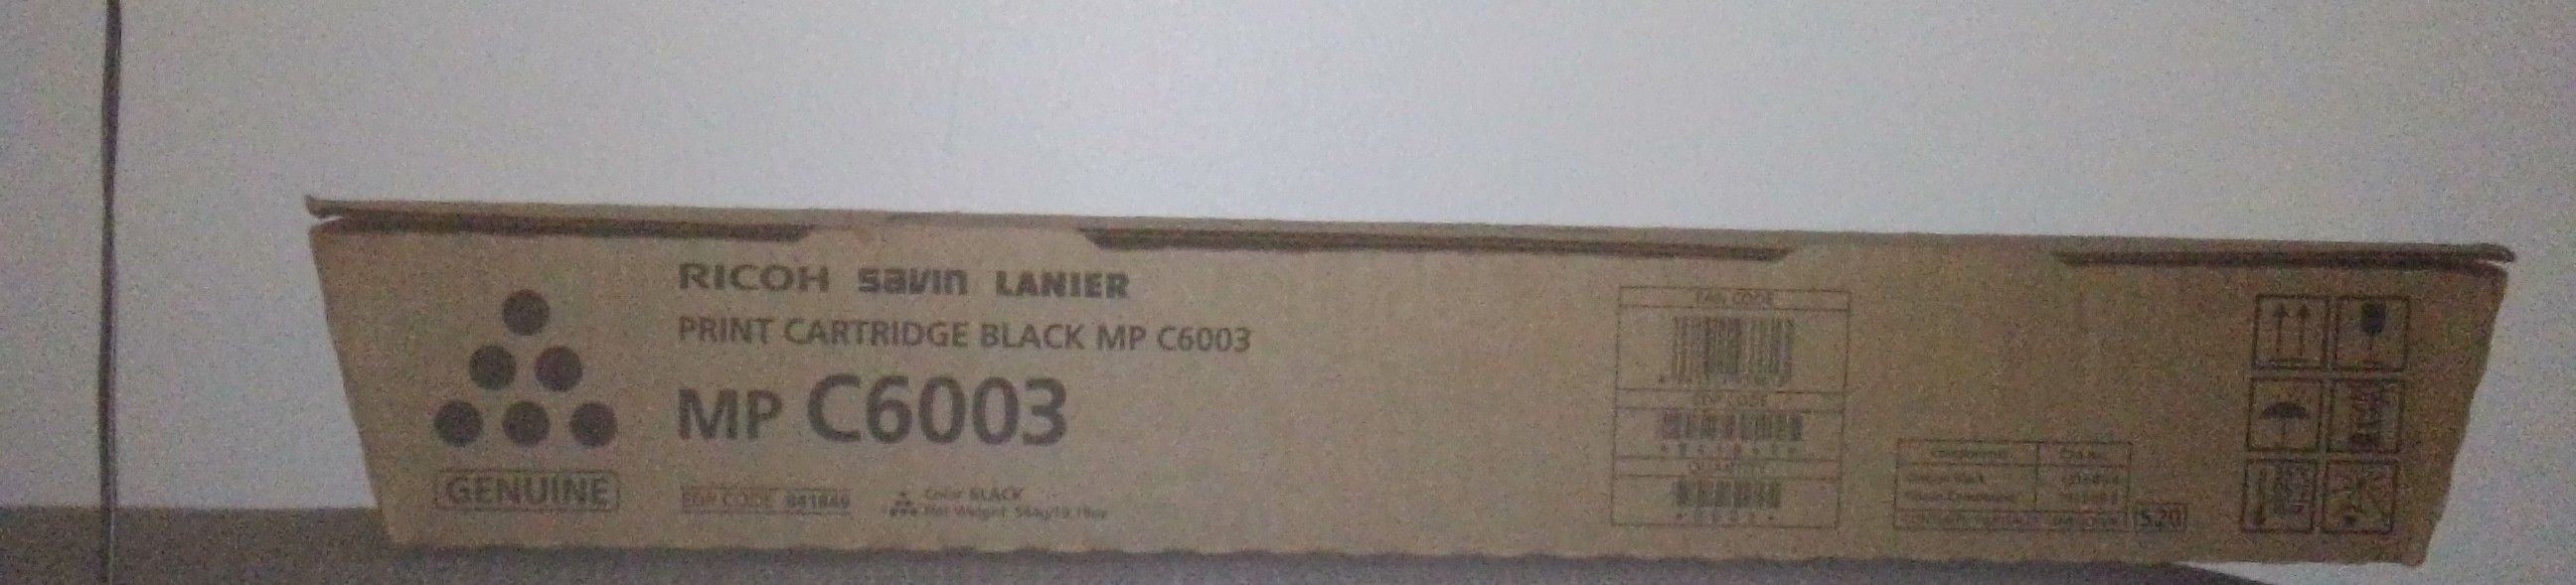 Printer Toner Cartridge Black MP C6003